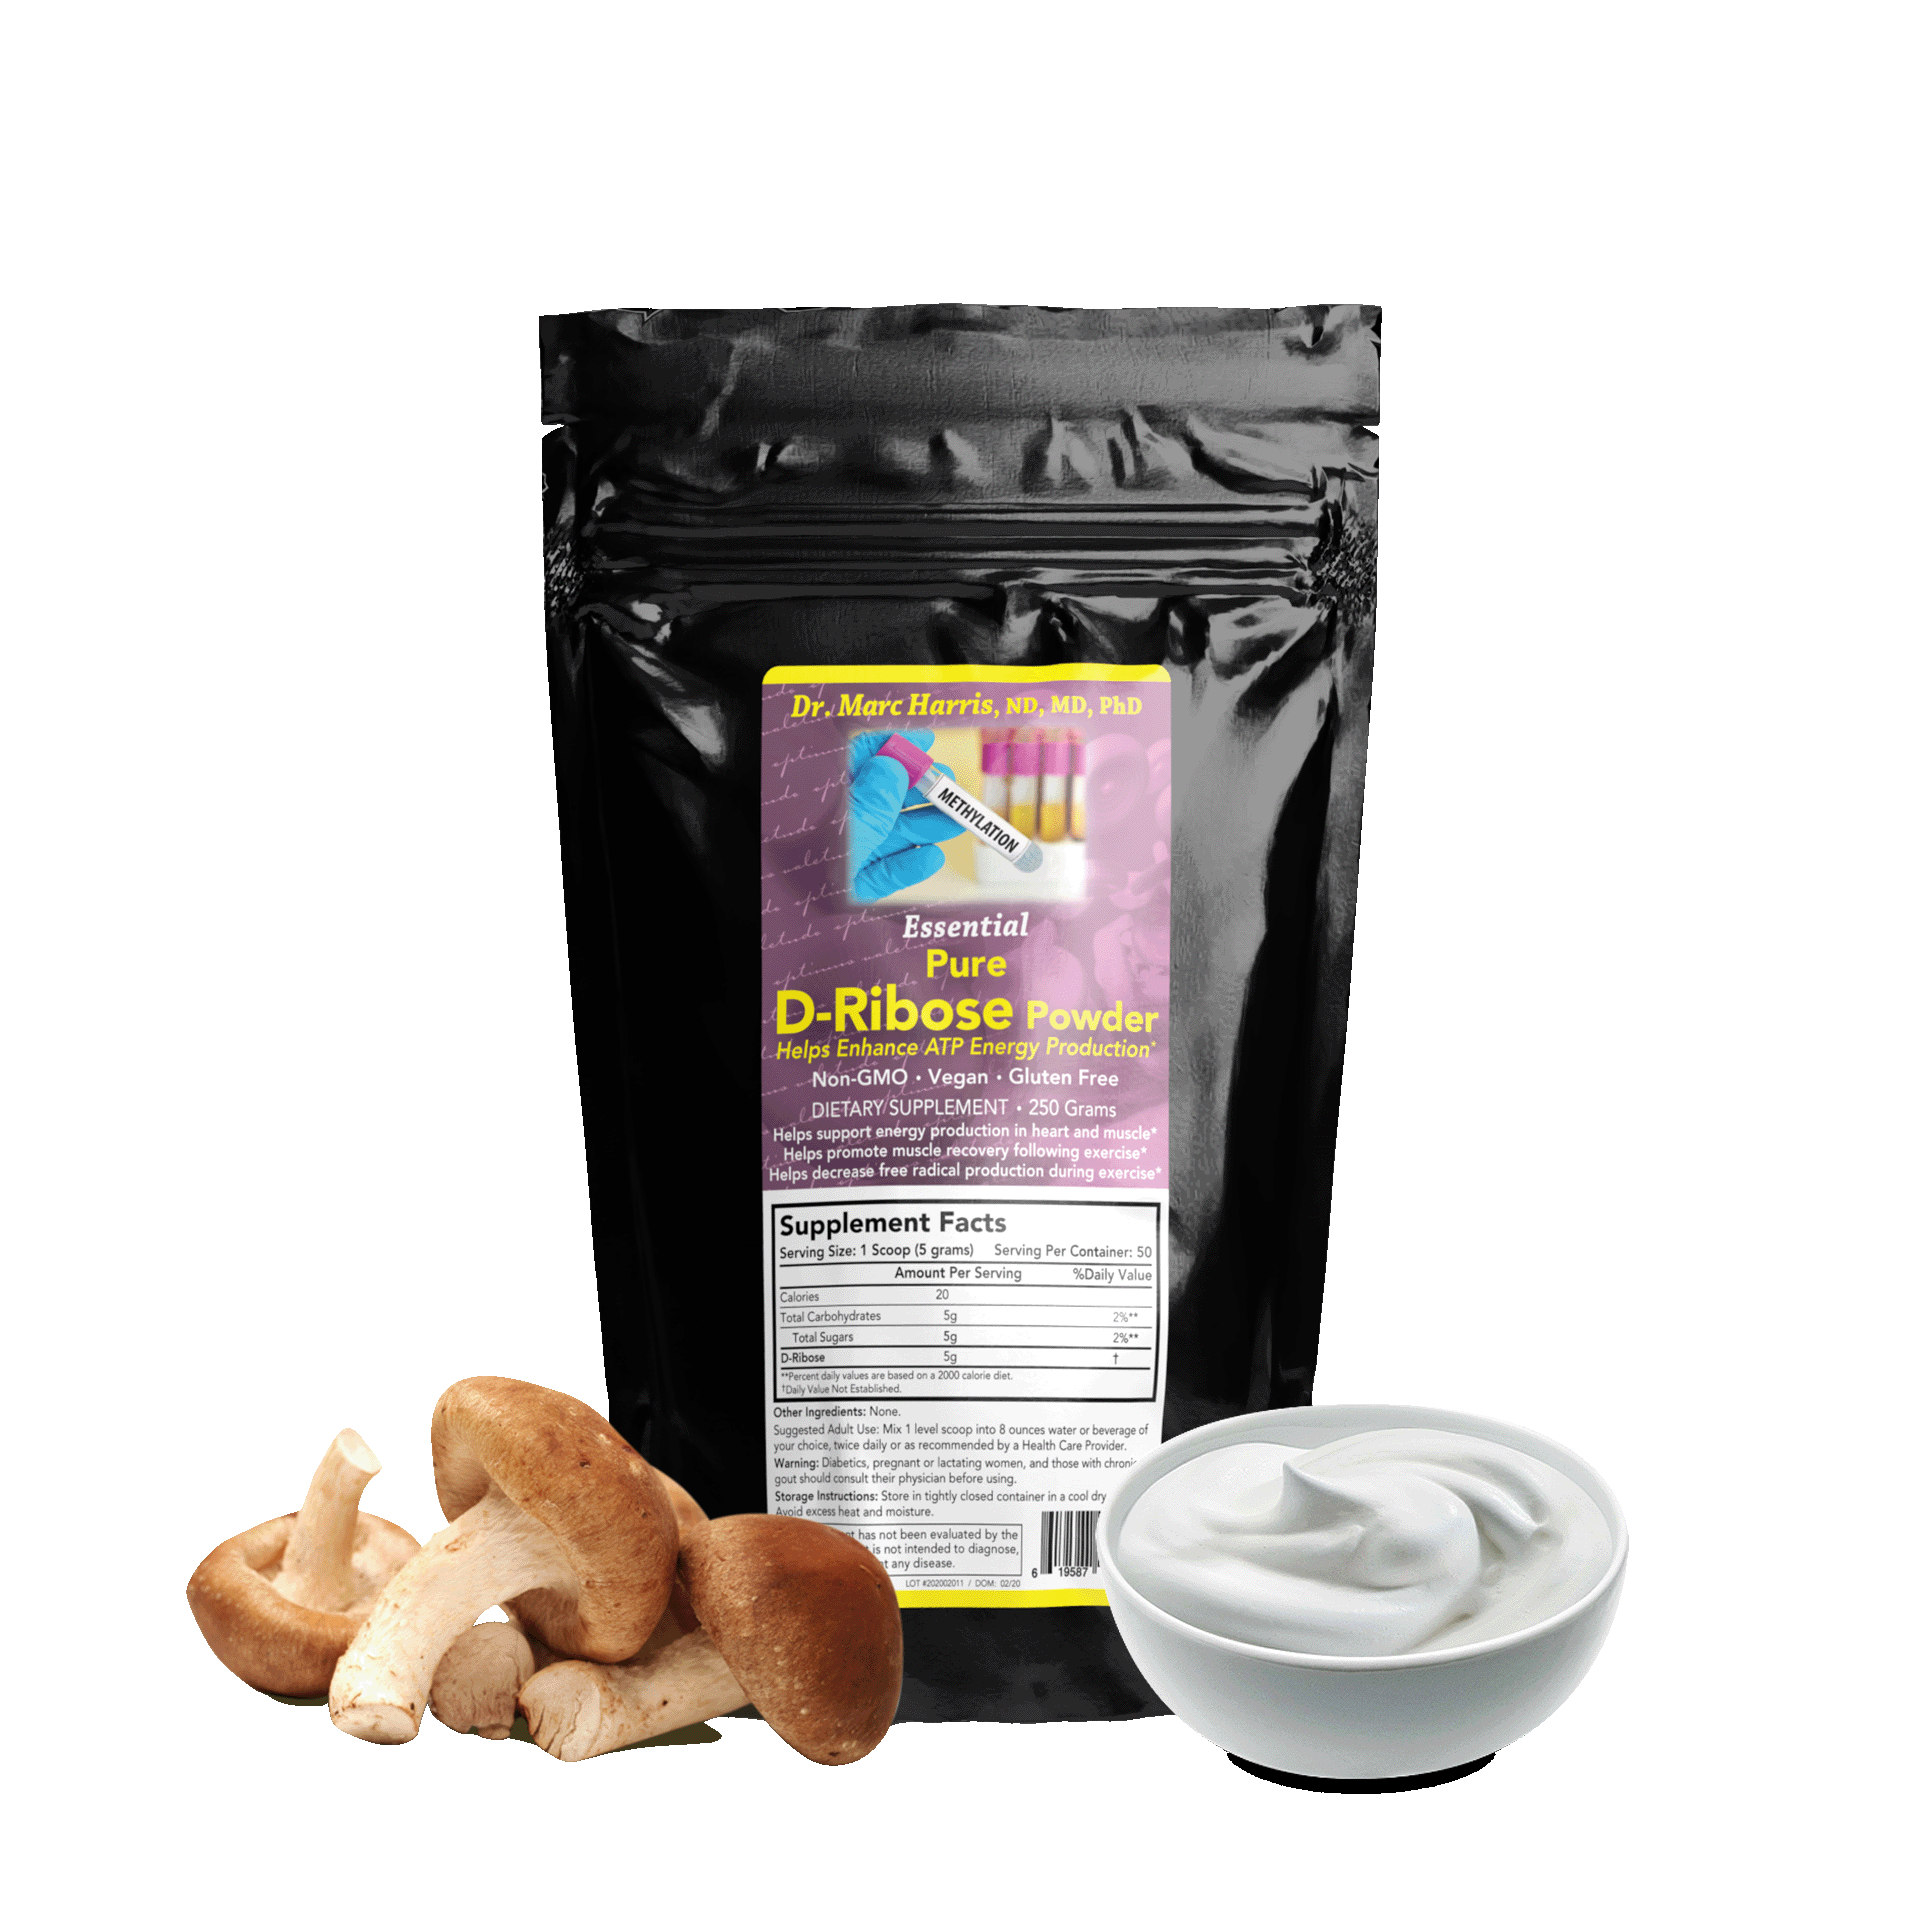 Image of a Bag of Essentials D-Ribose Powder. Around the bag are mushrooms and yogurt.